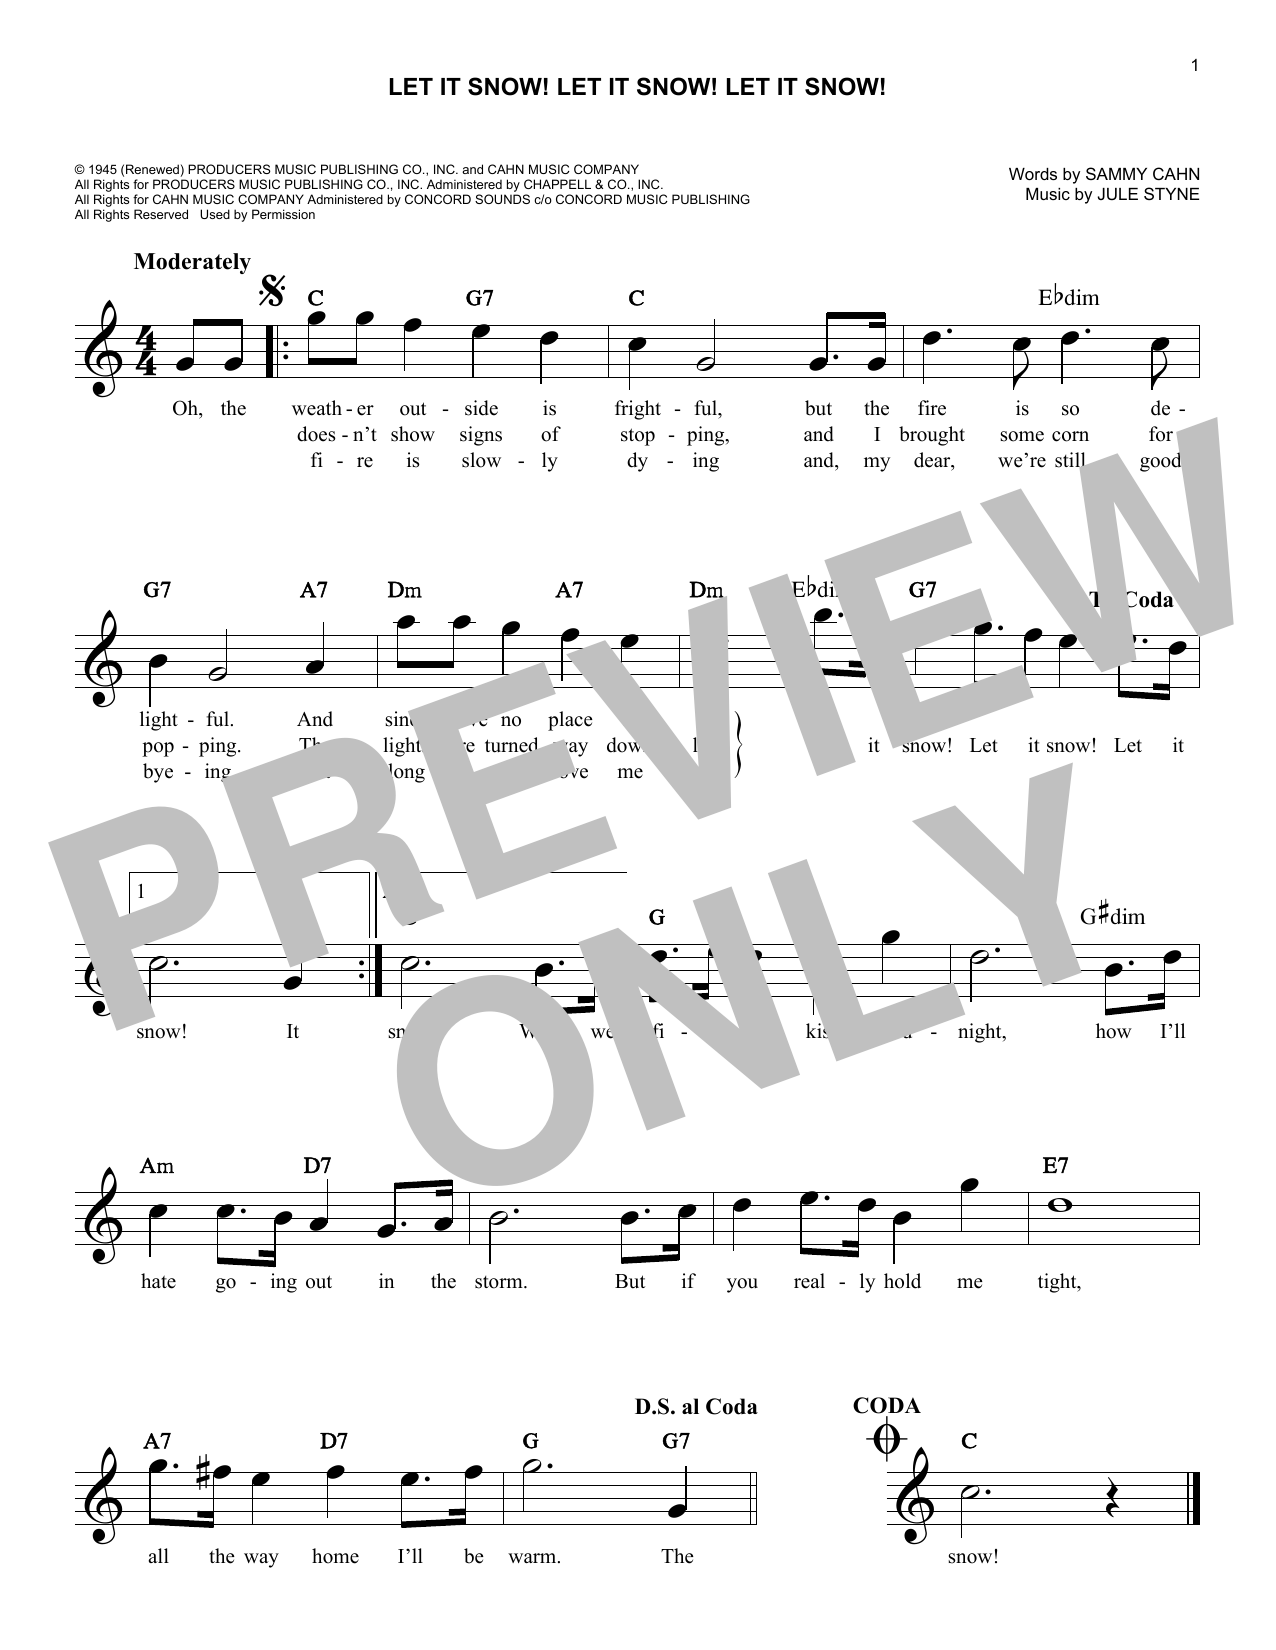 Download Jule Styne & Sammy Cahn Let It Snow! Let It Snow! Let It Snow! Sheet Music and learn how to play Lead Sheet / Fake Book PDF digital score in minutes